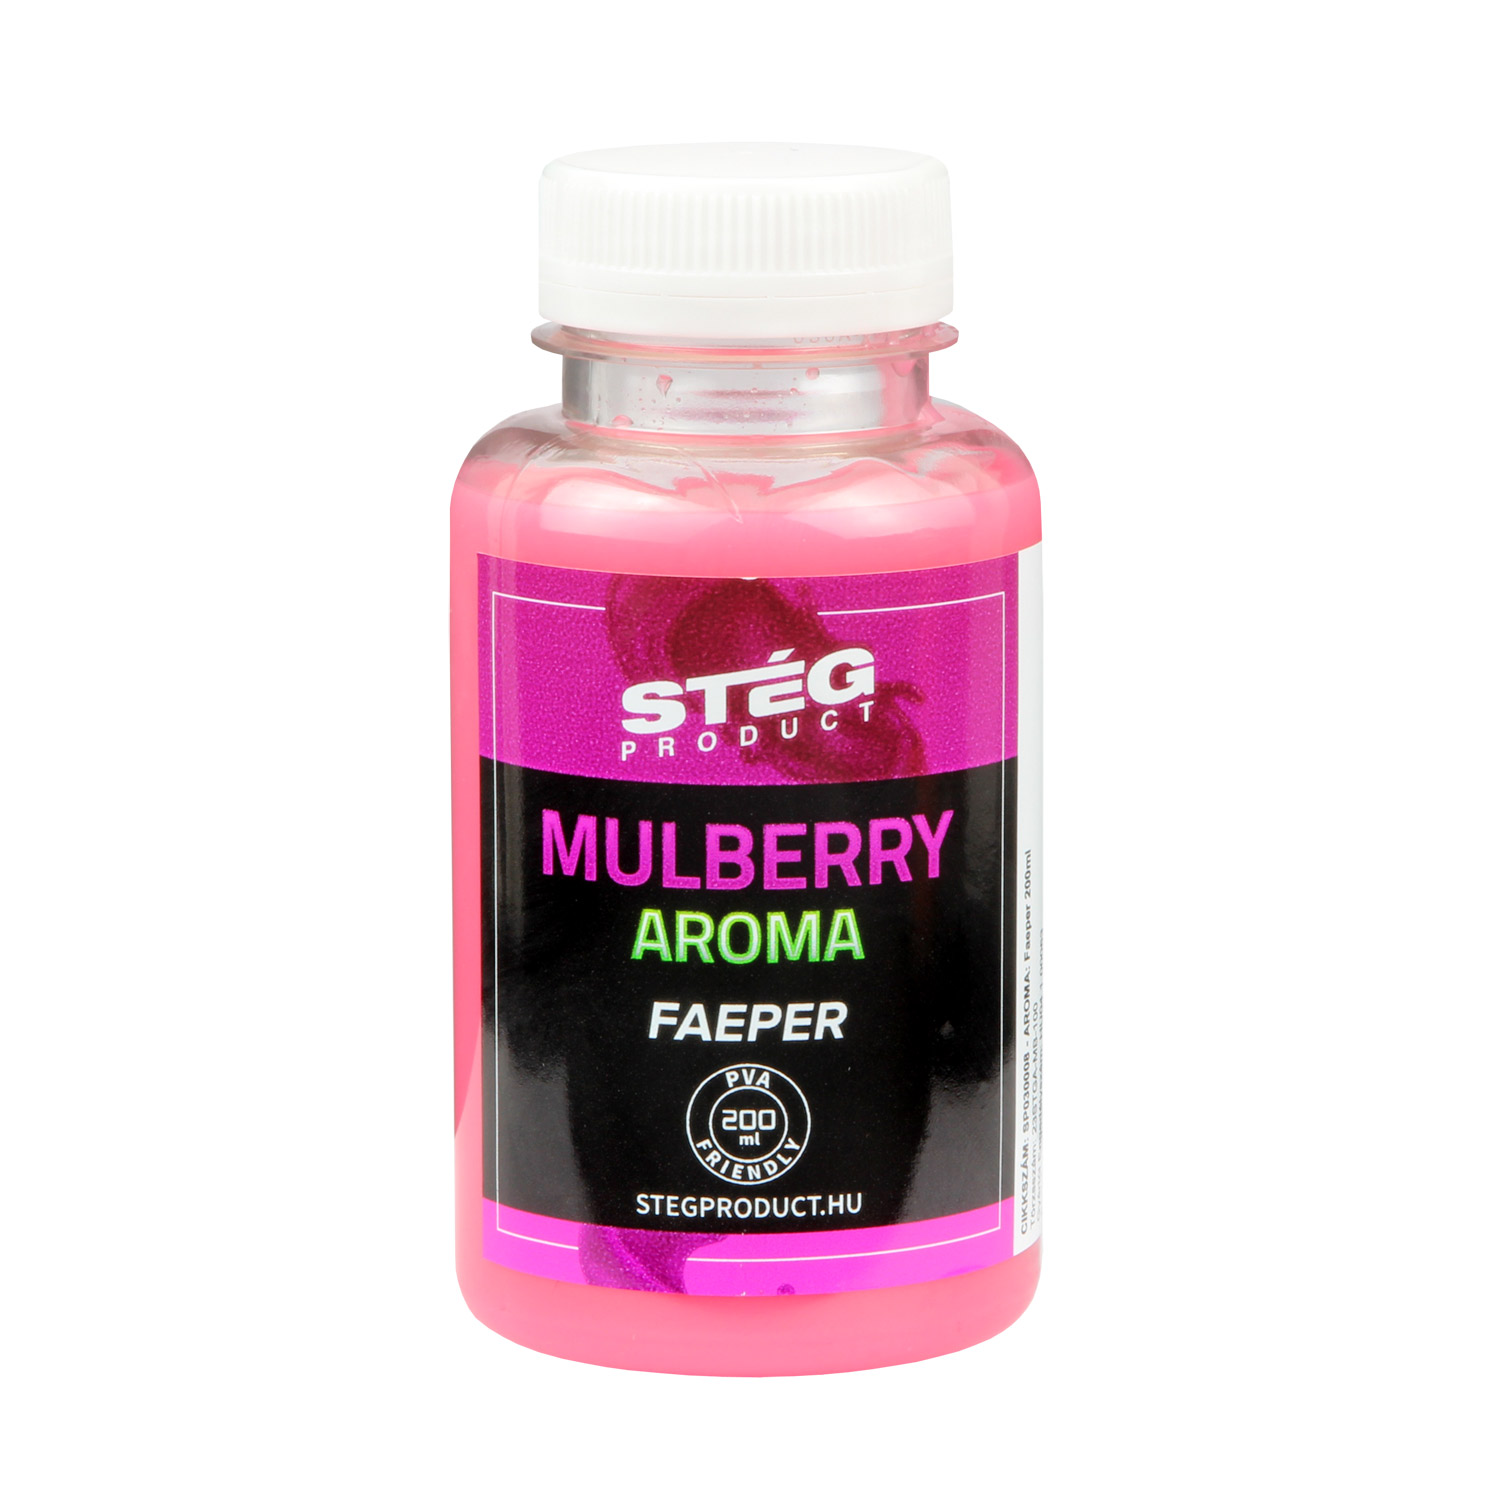 Stg Aroma Mulberry 200ml